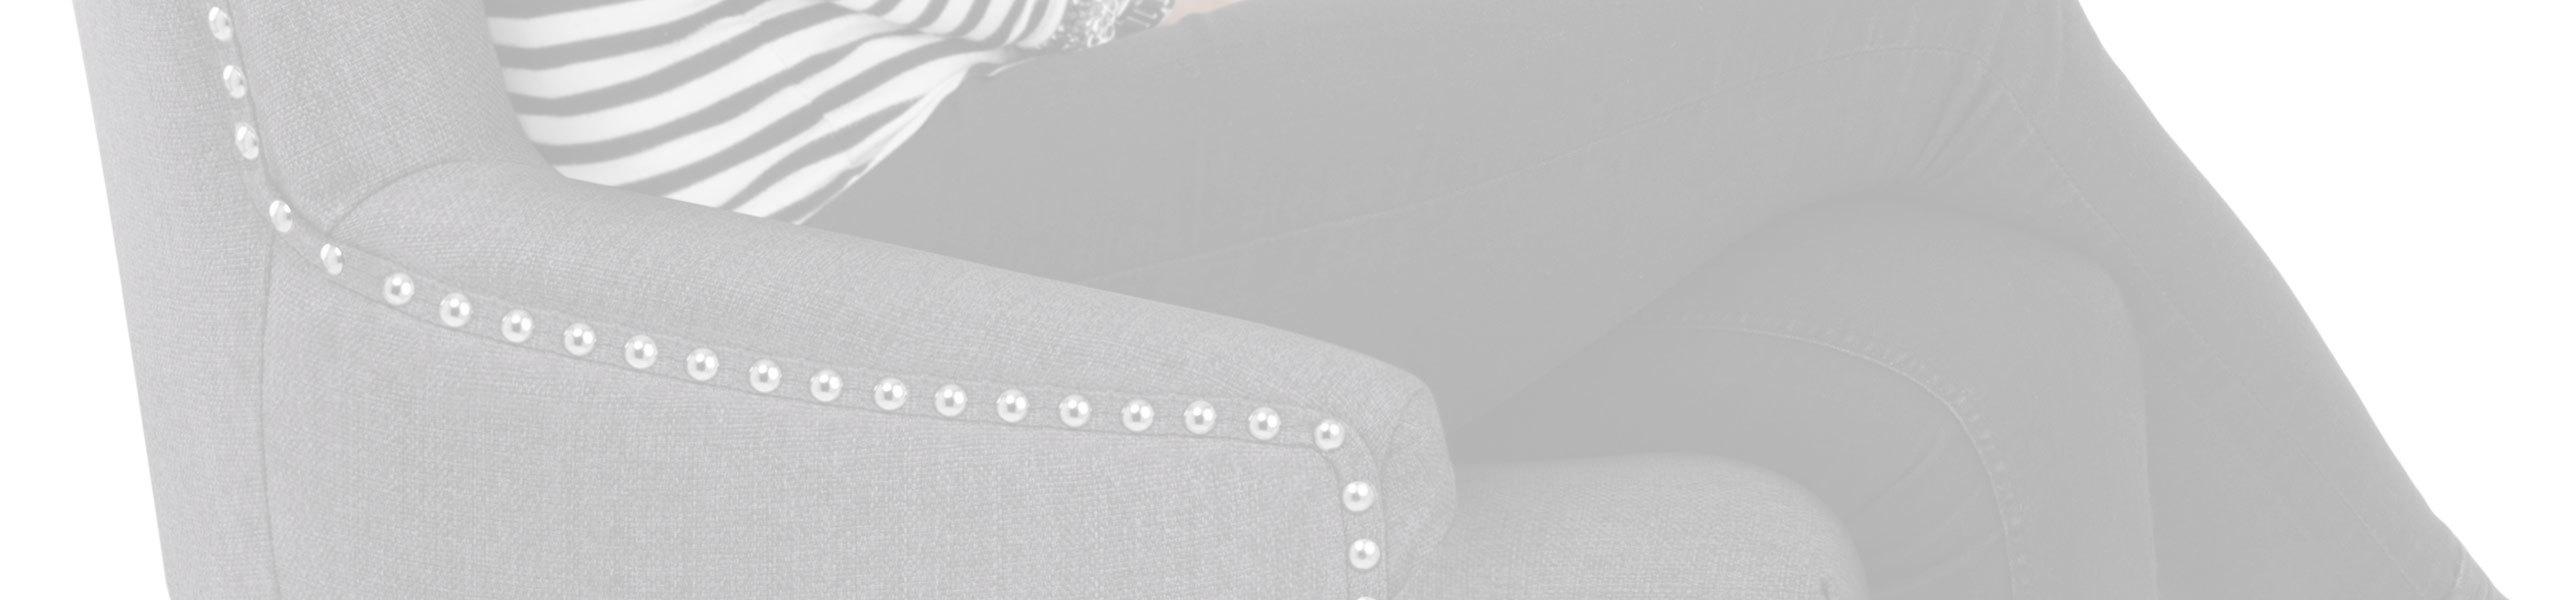 Knightsbridge Oak Chair Charcoal Fabric Review Banner